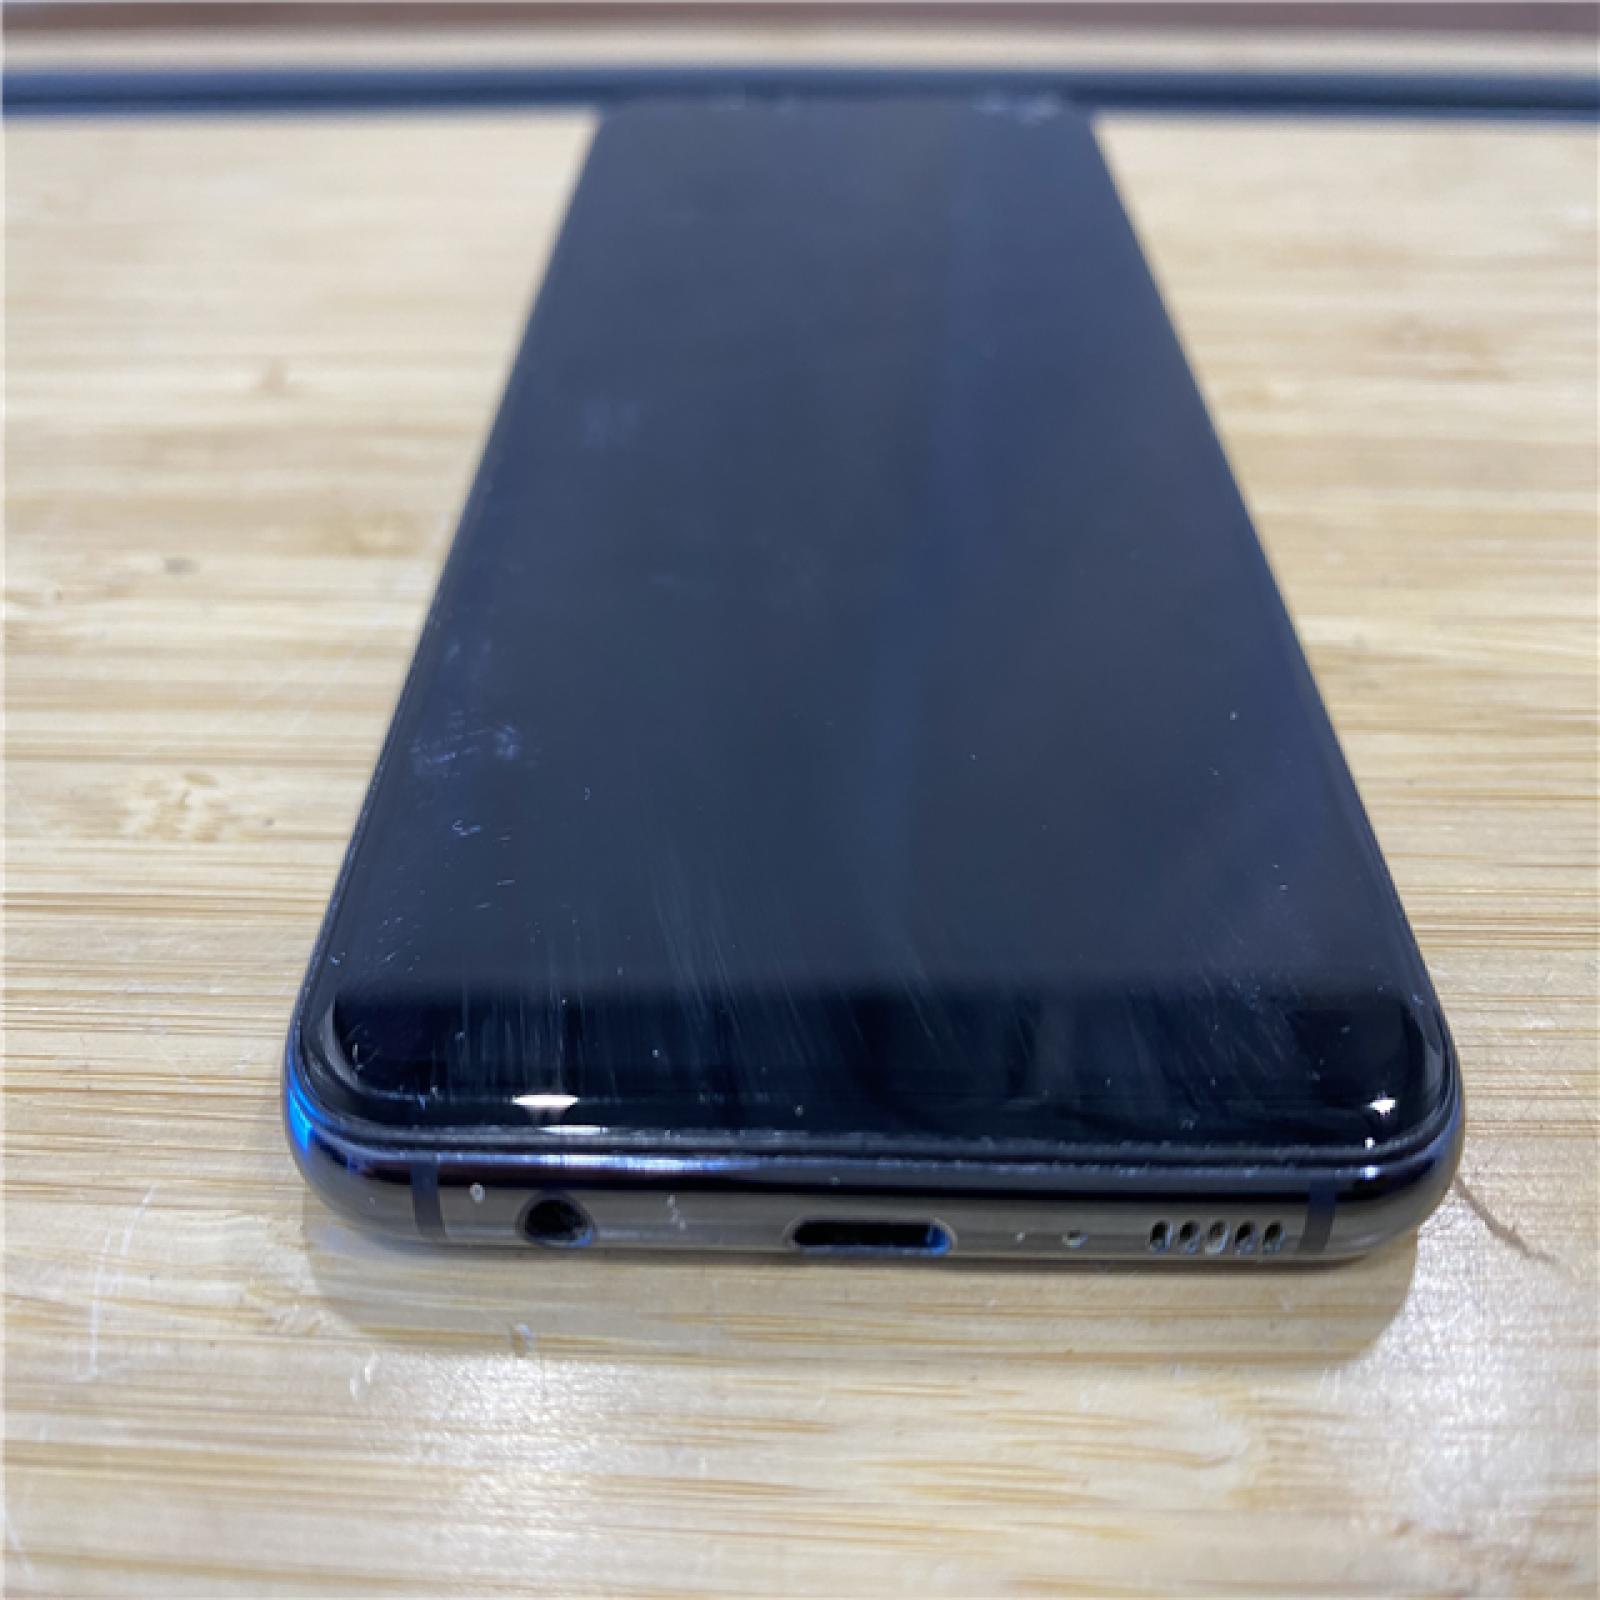 AS-IS Samsung Galaxy S10e 128GB Prism Black